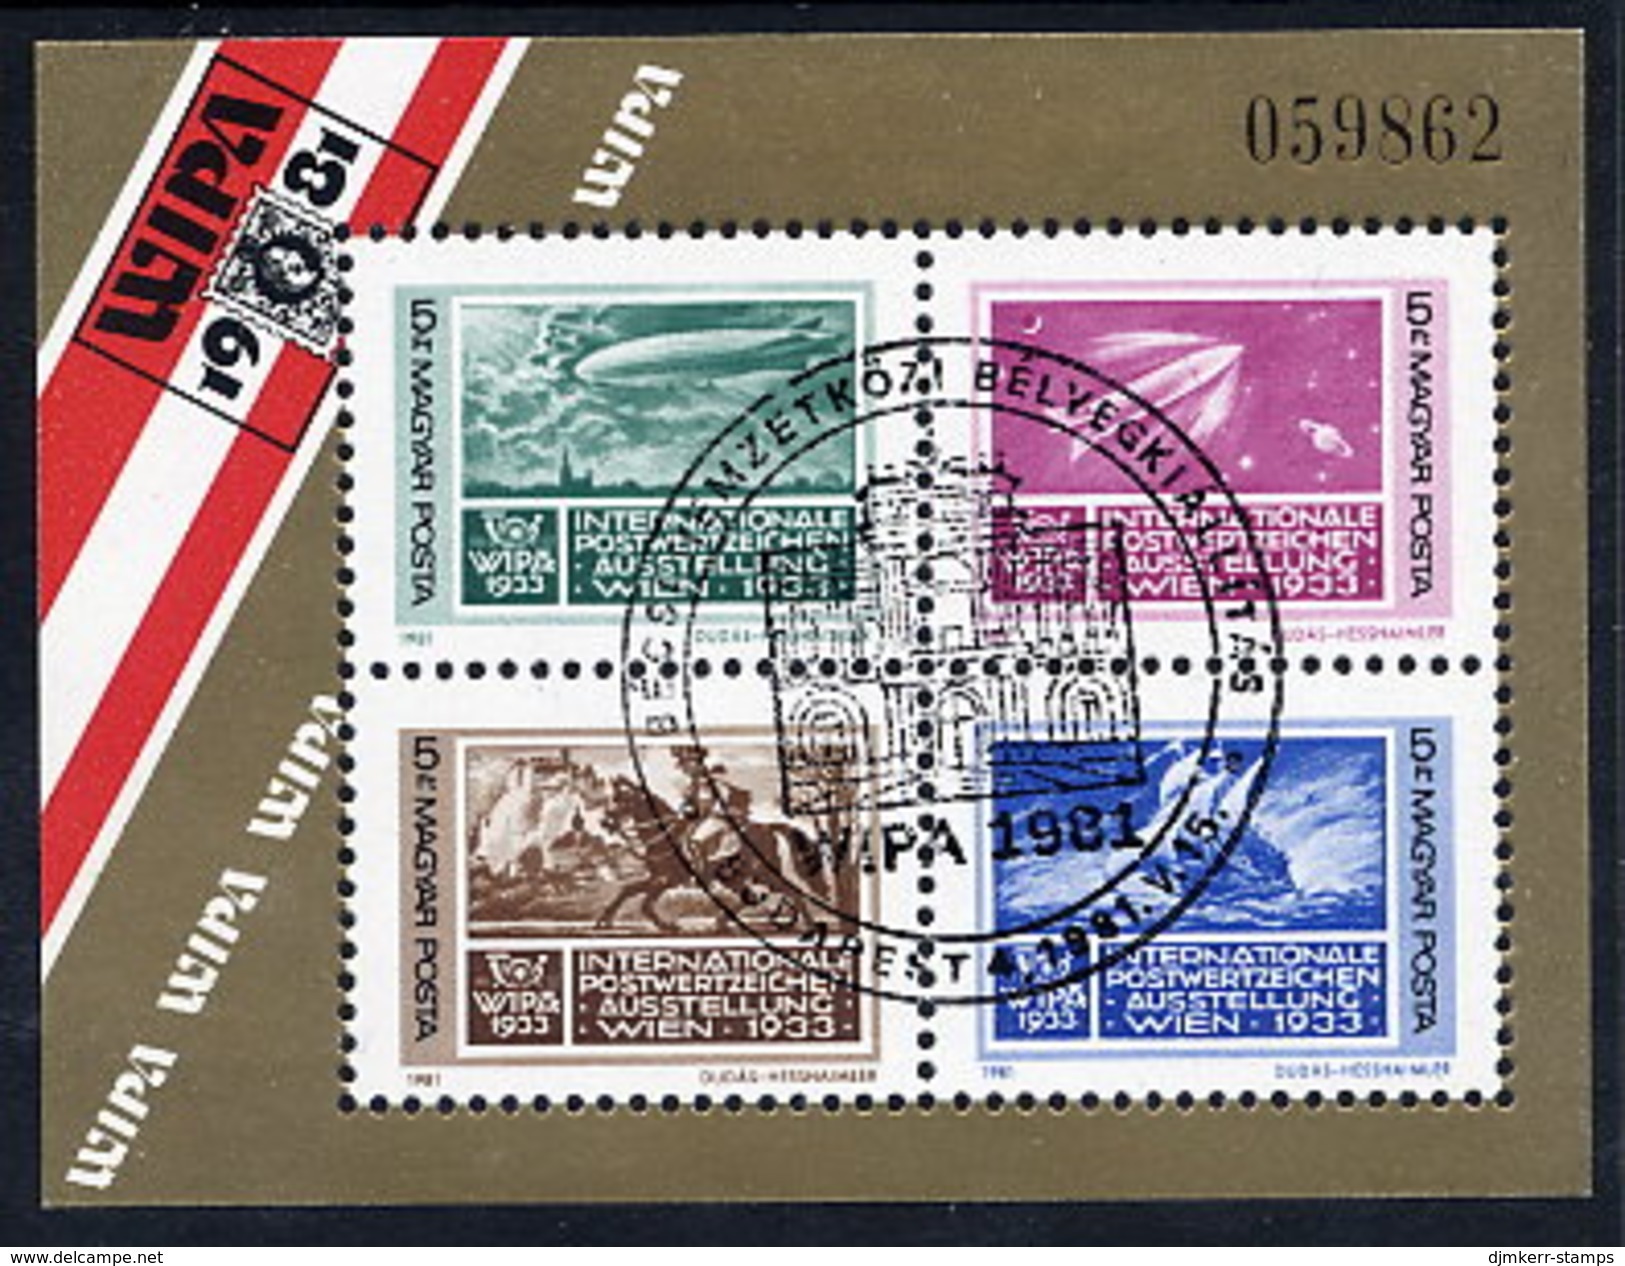 HUNGARY 1981 WIPA Stamp Exhibition Block Used.  Michel Block 150 - Usado